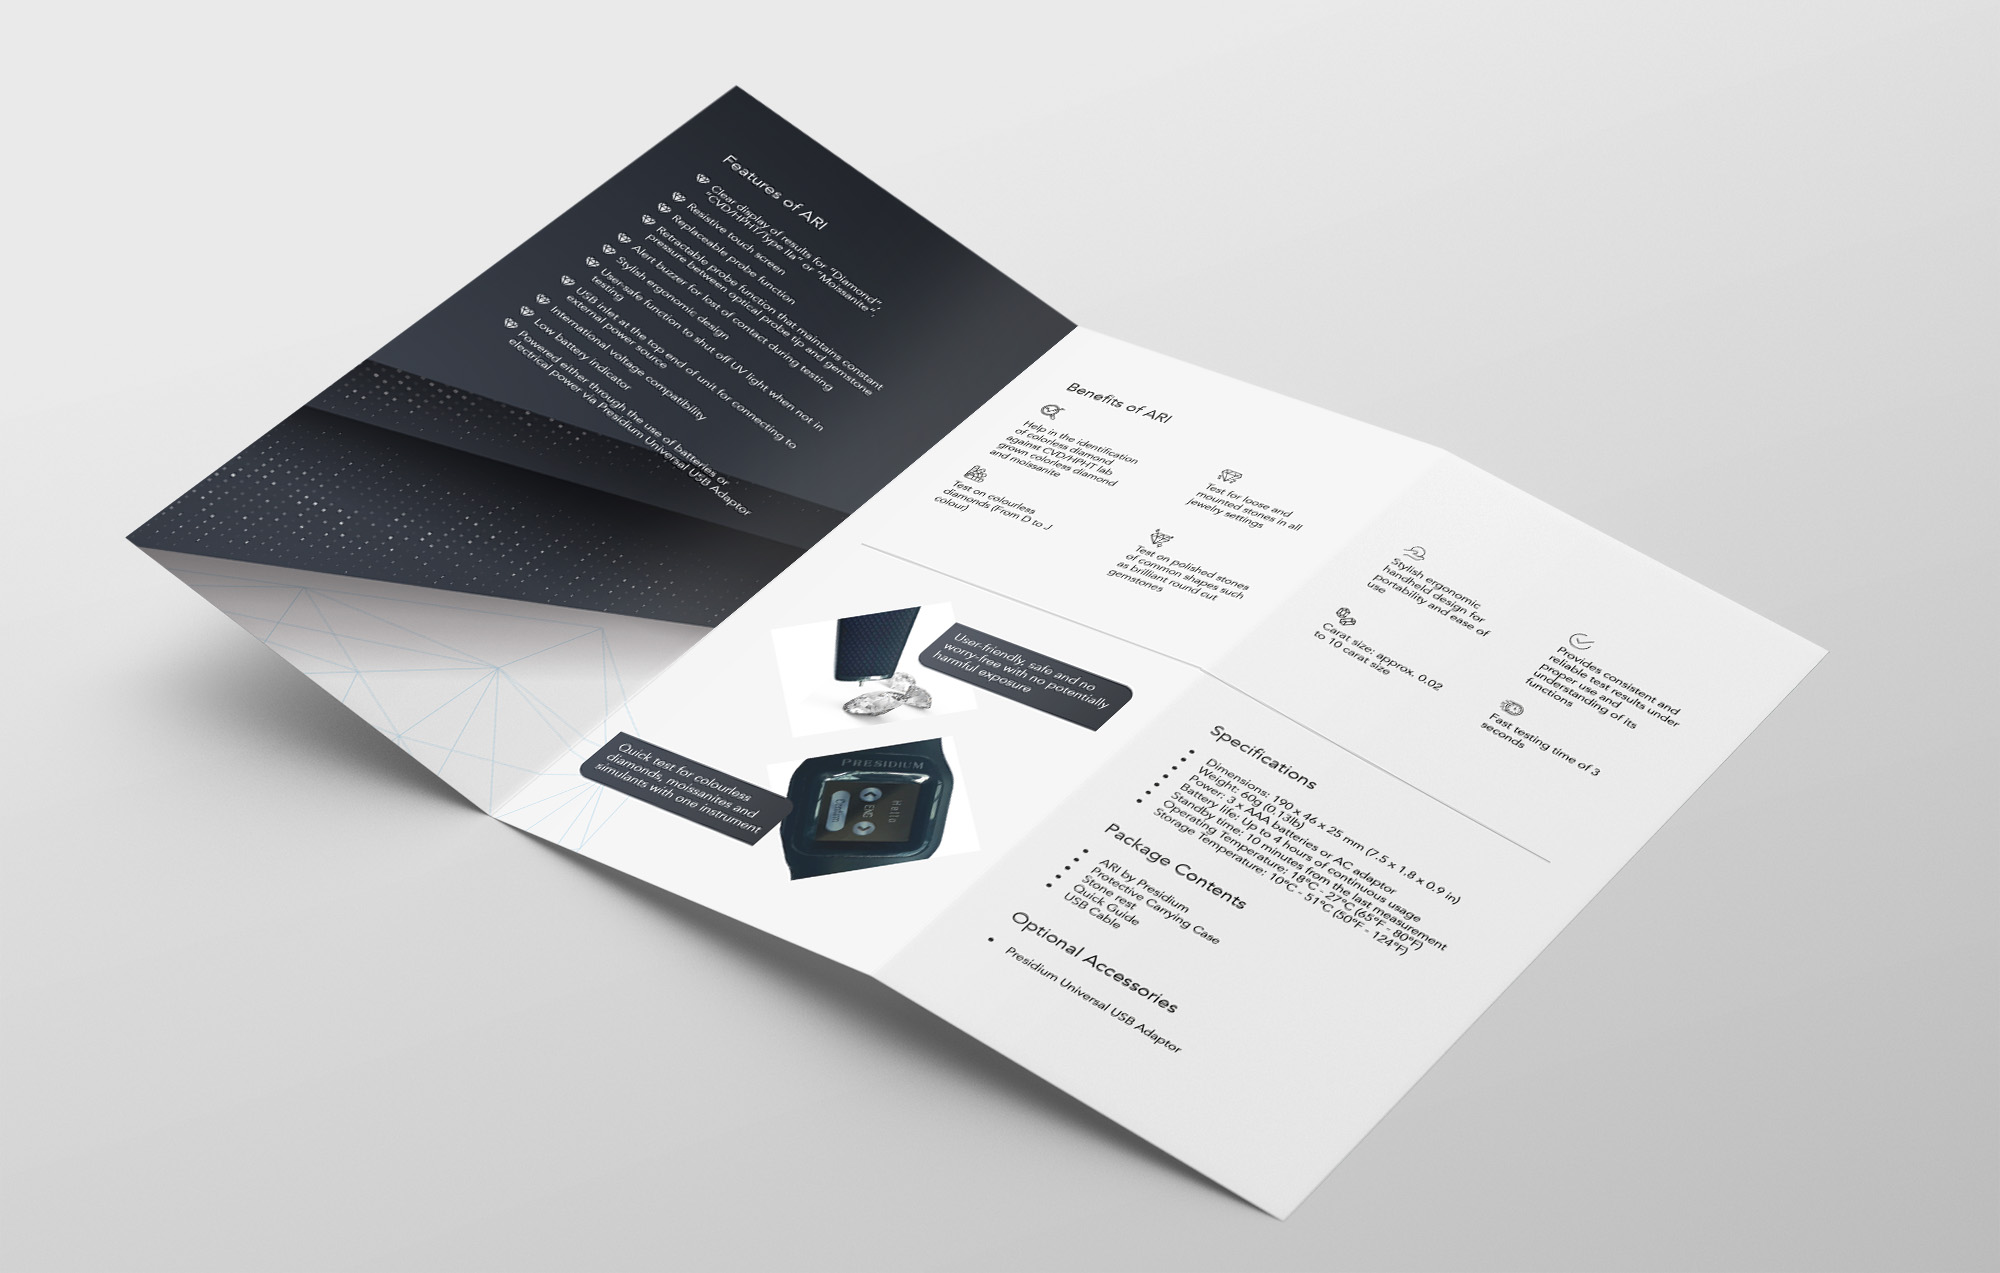 Presidum Packaging and DL Brochure Design